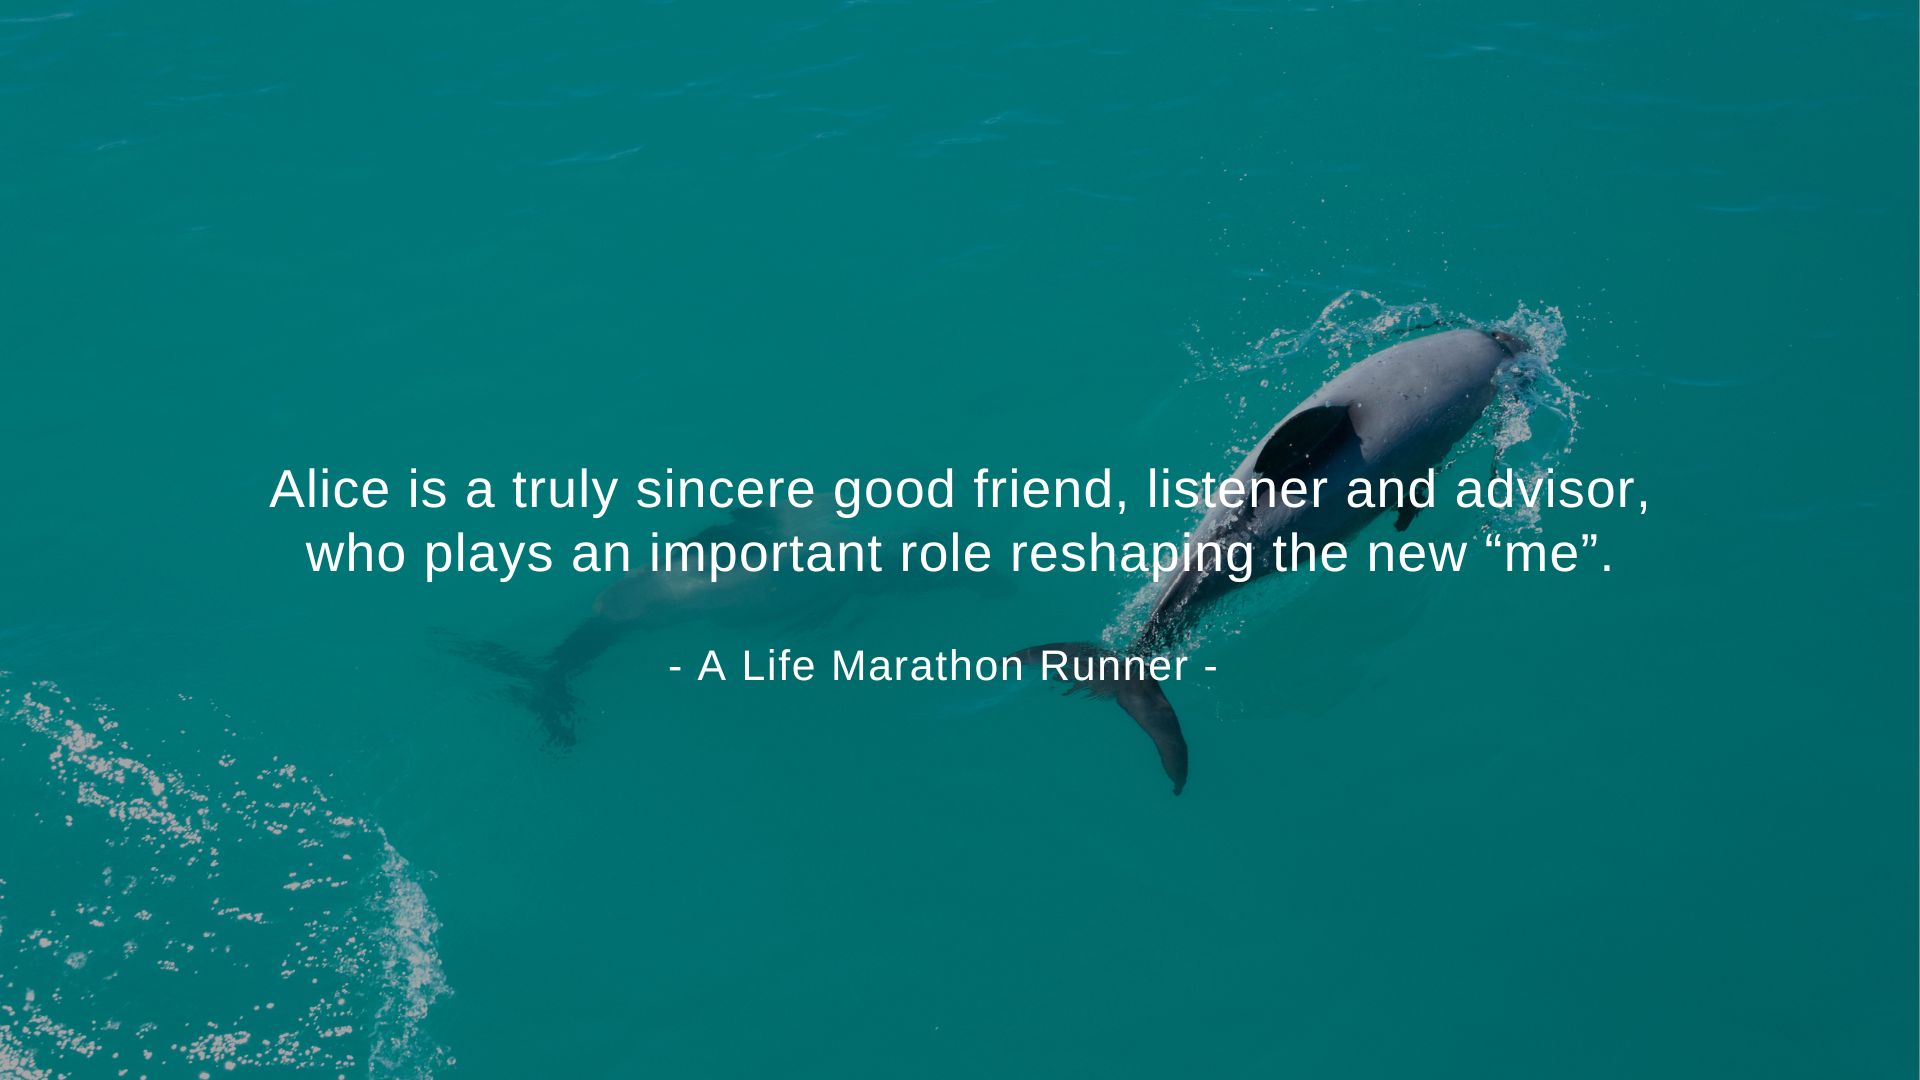 A Life Marathon Runner